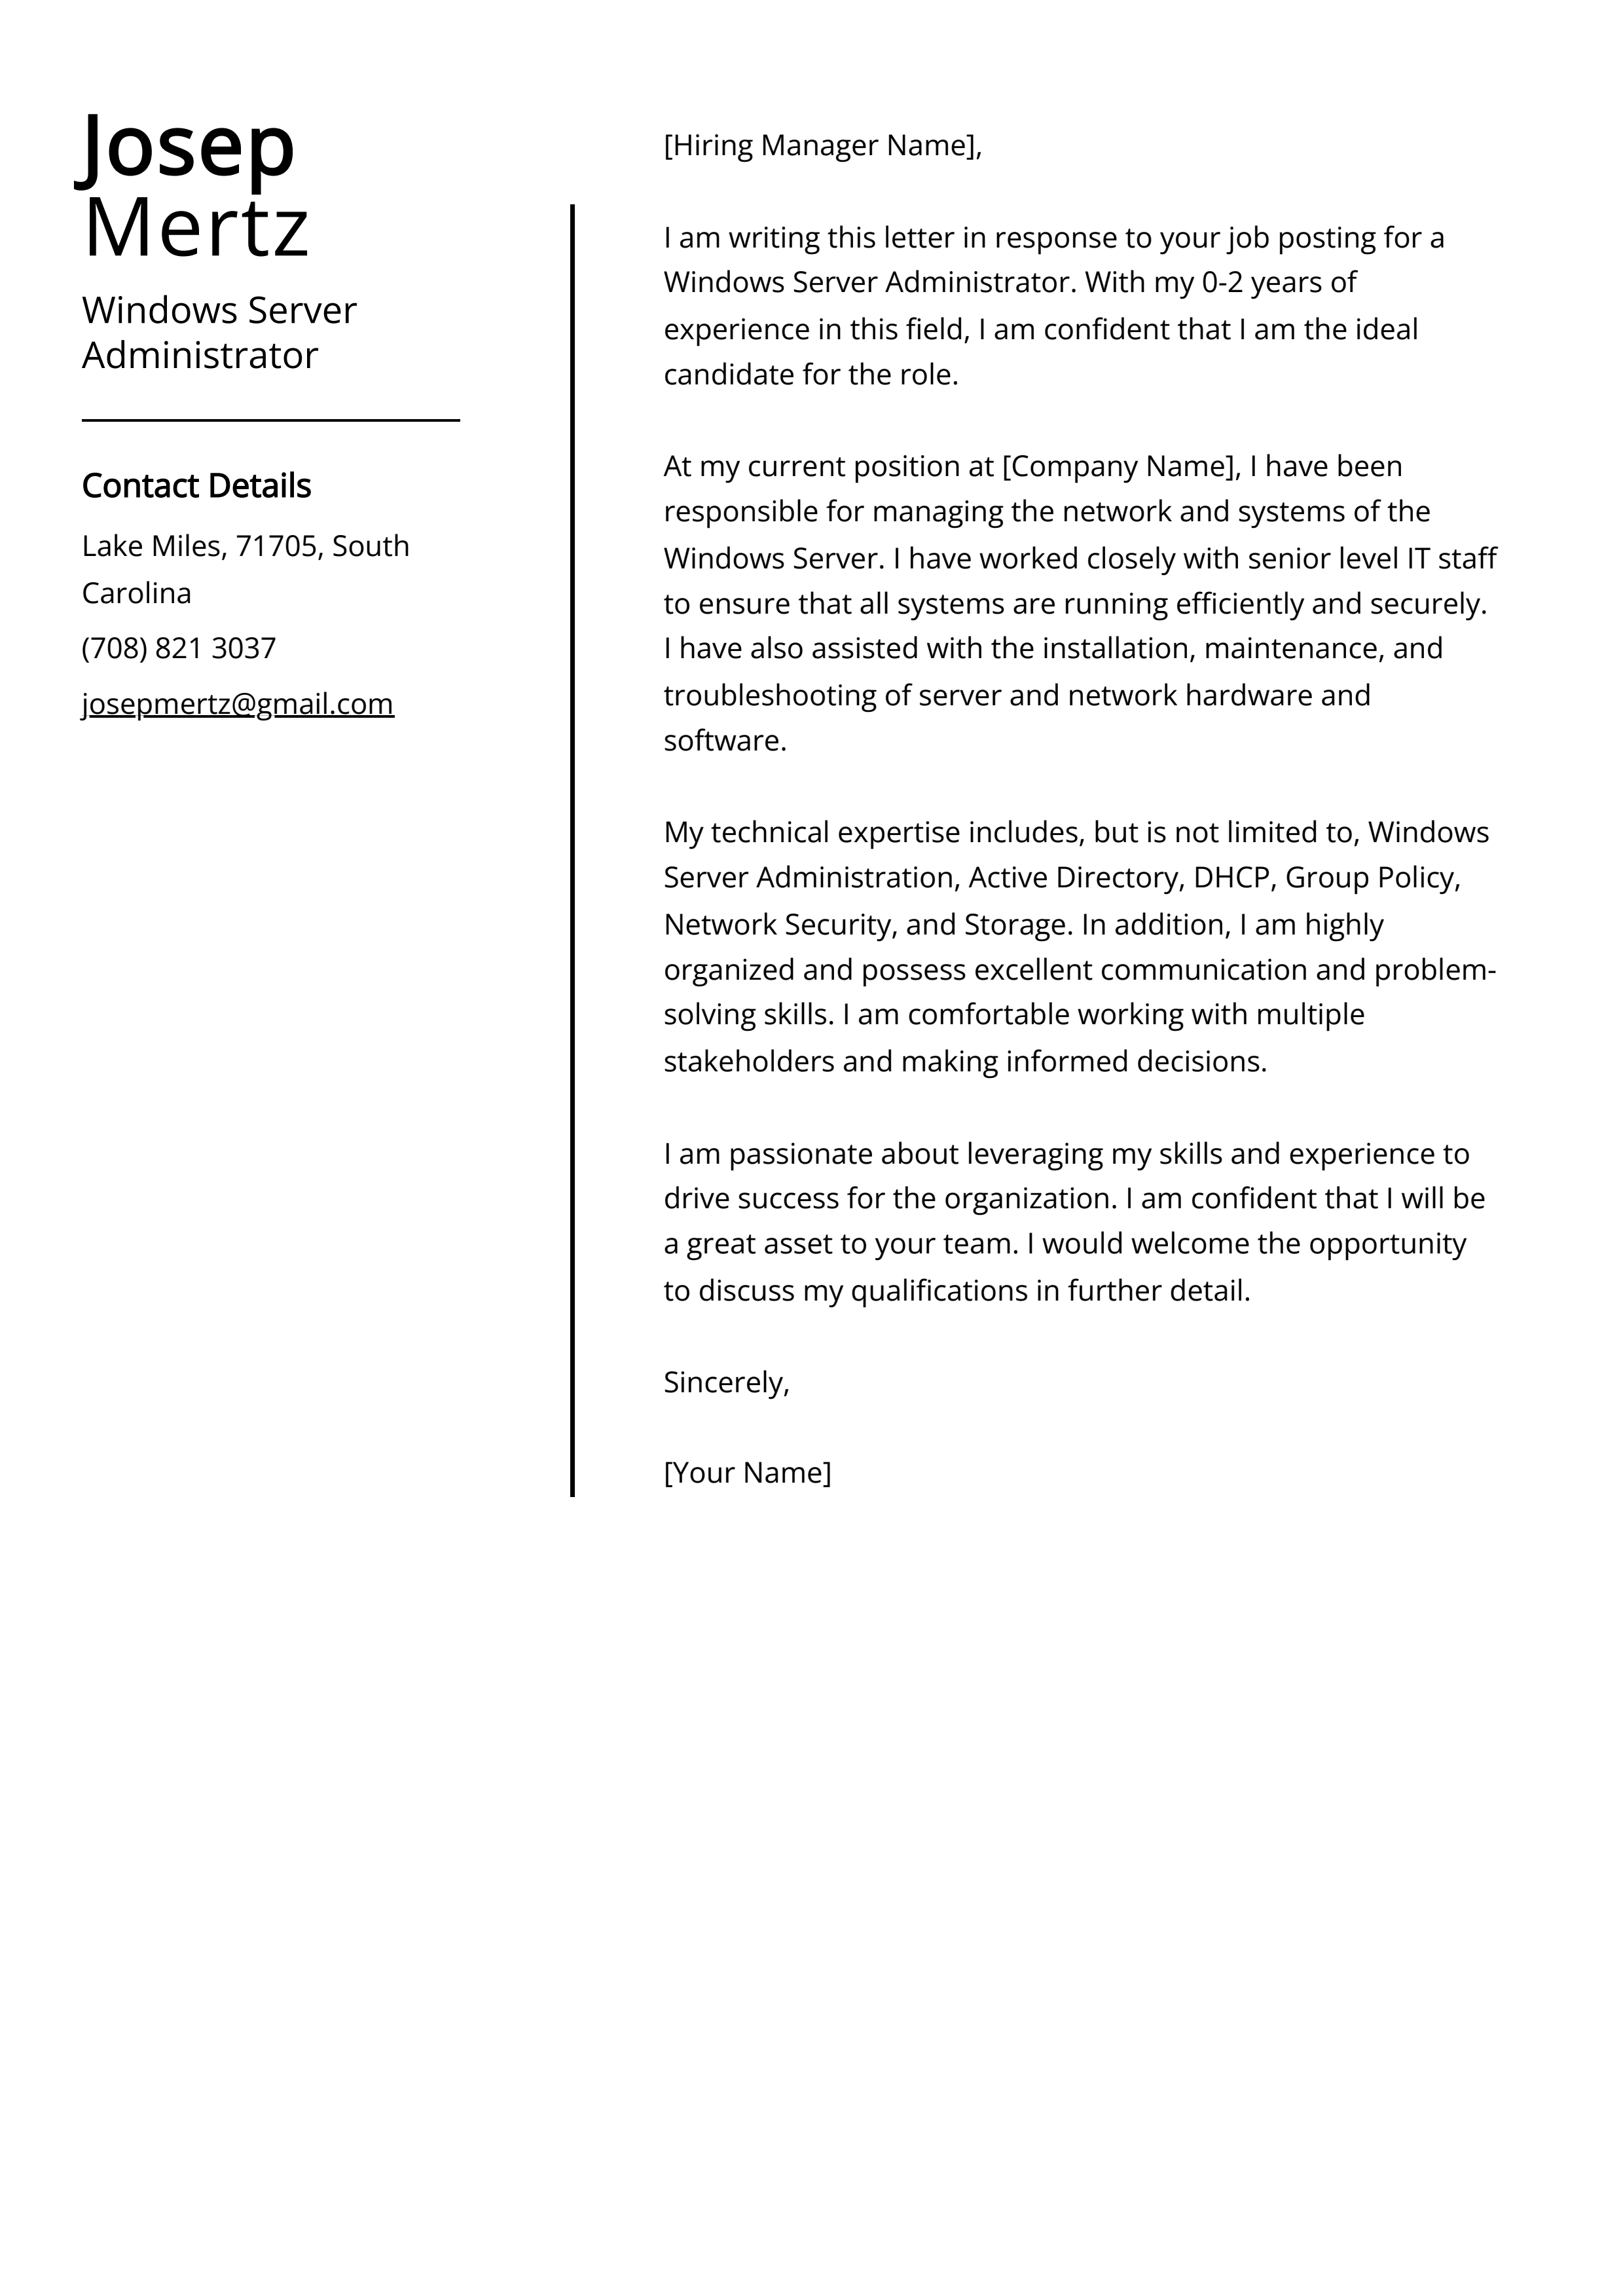 Windows Server Administrator Cover Letter Example